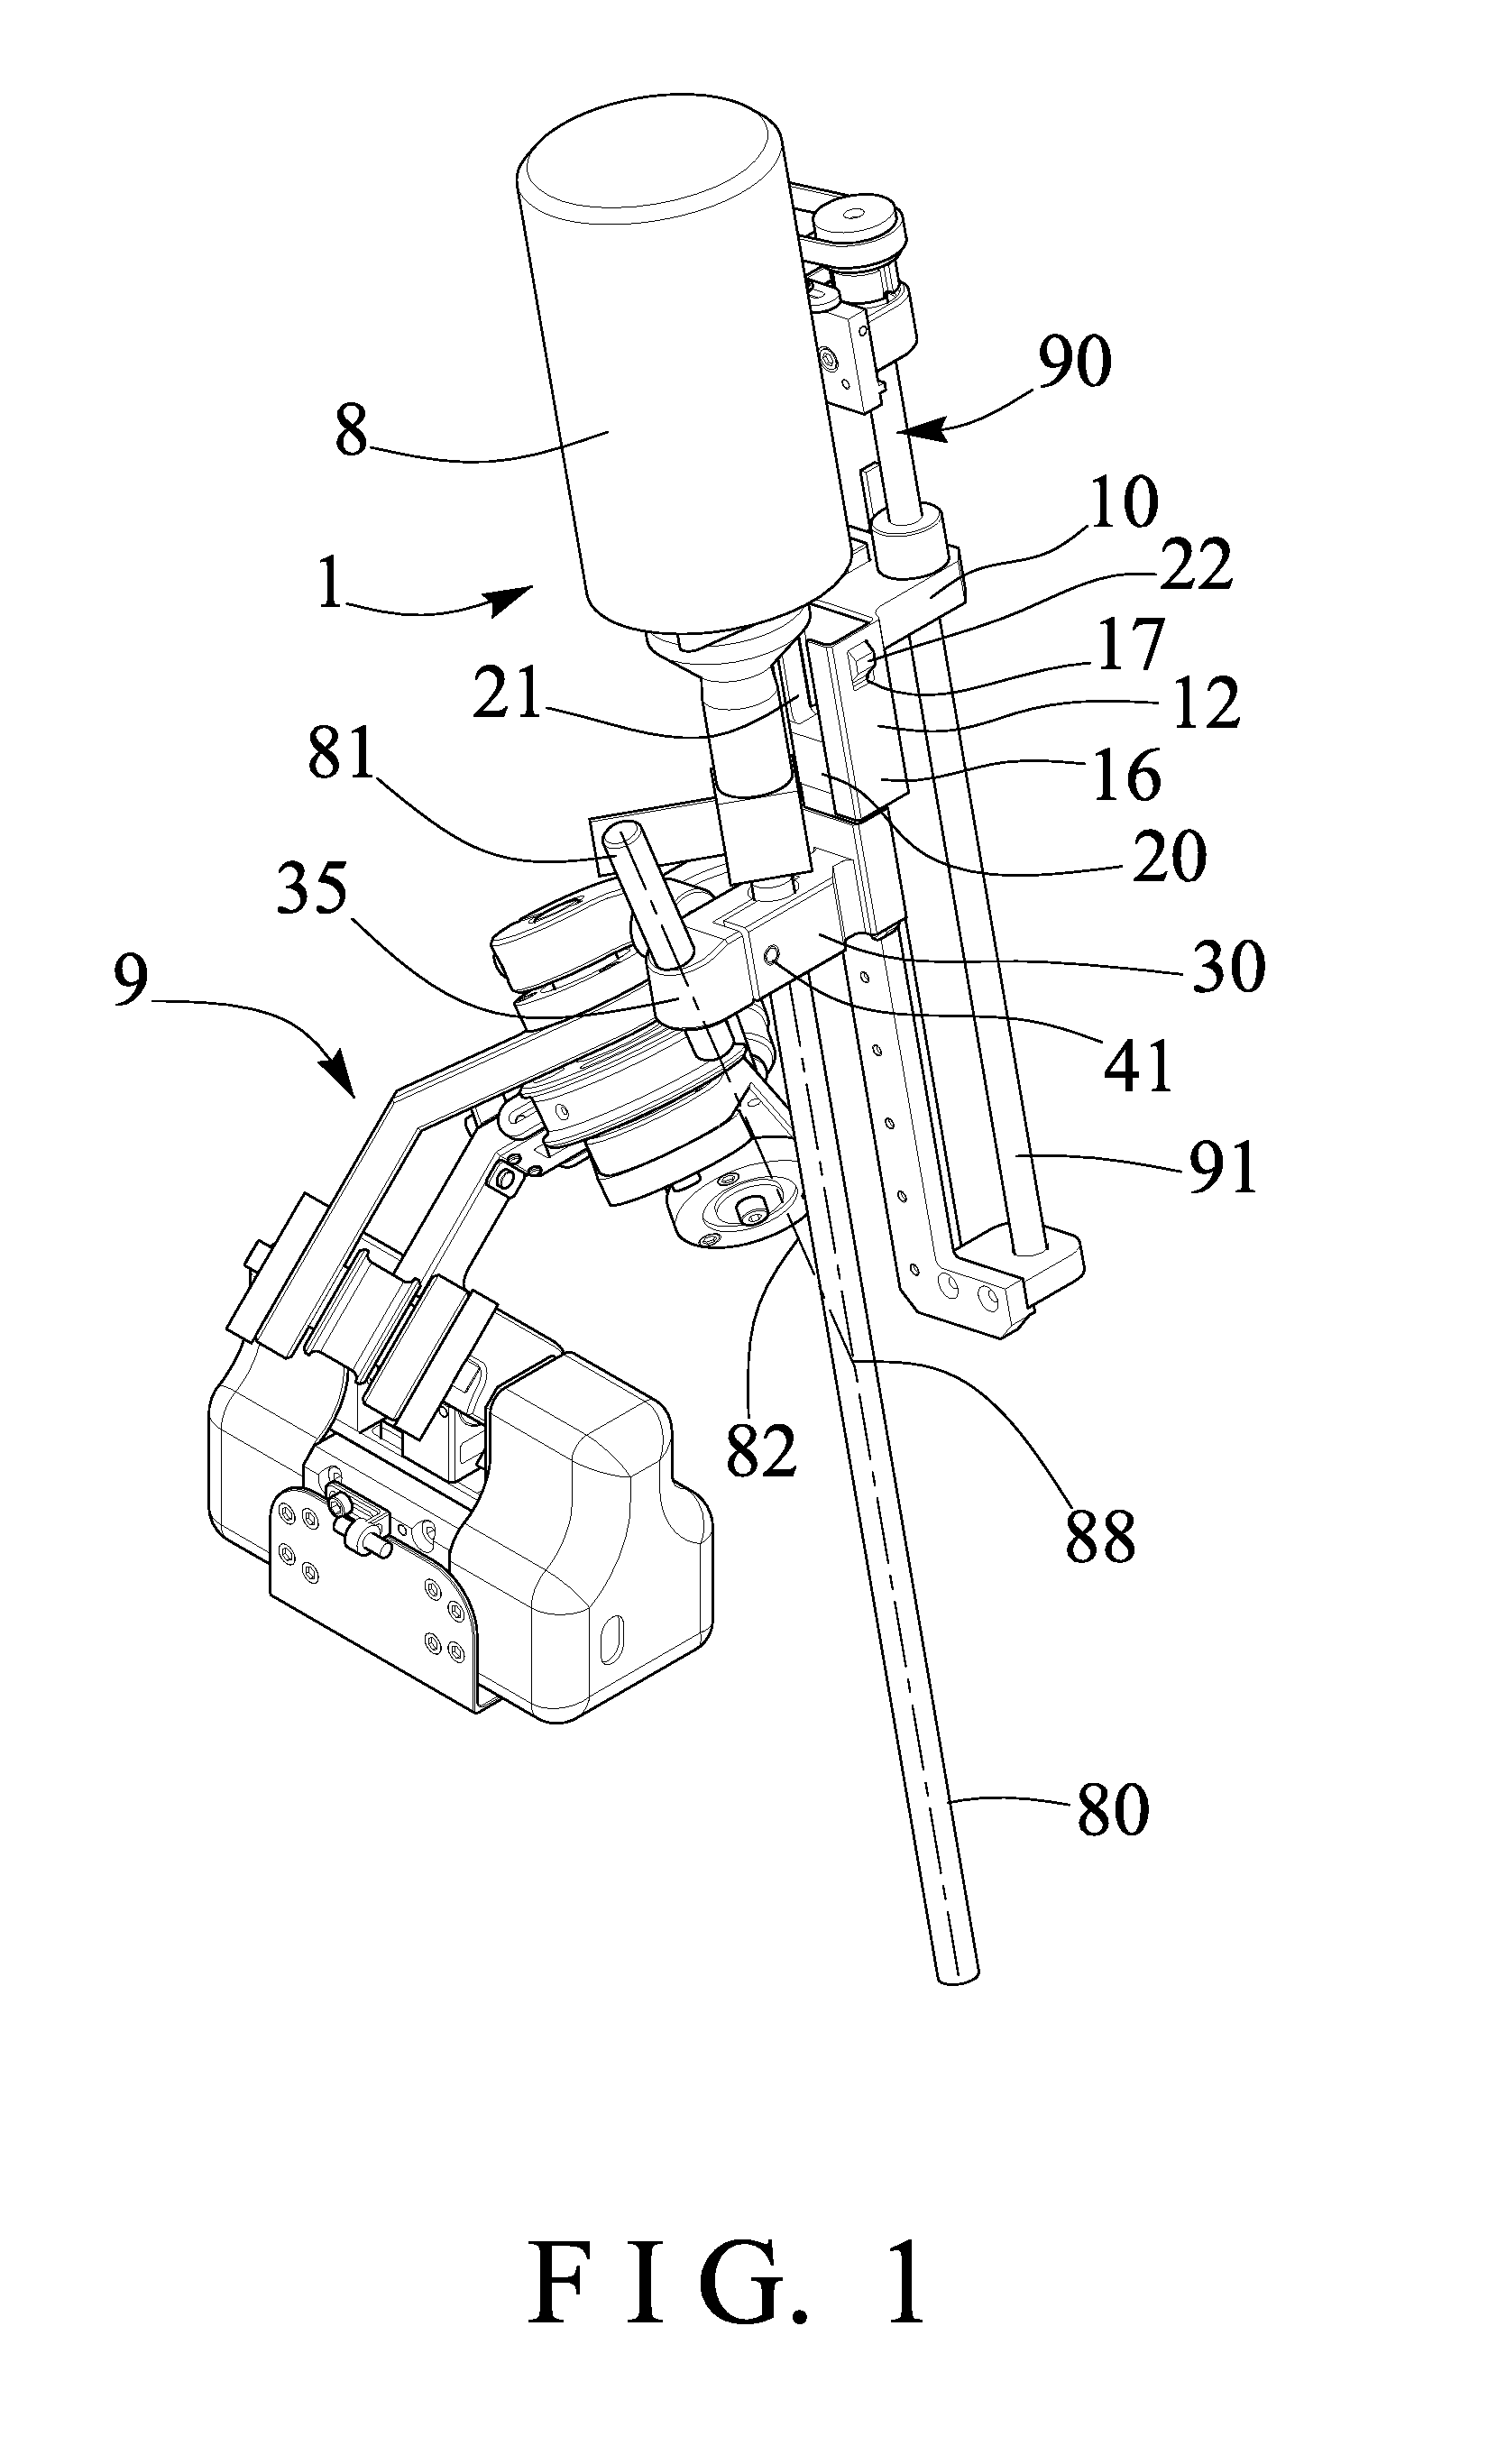 Medical instrument holding apparatus